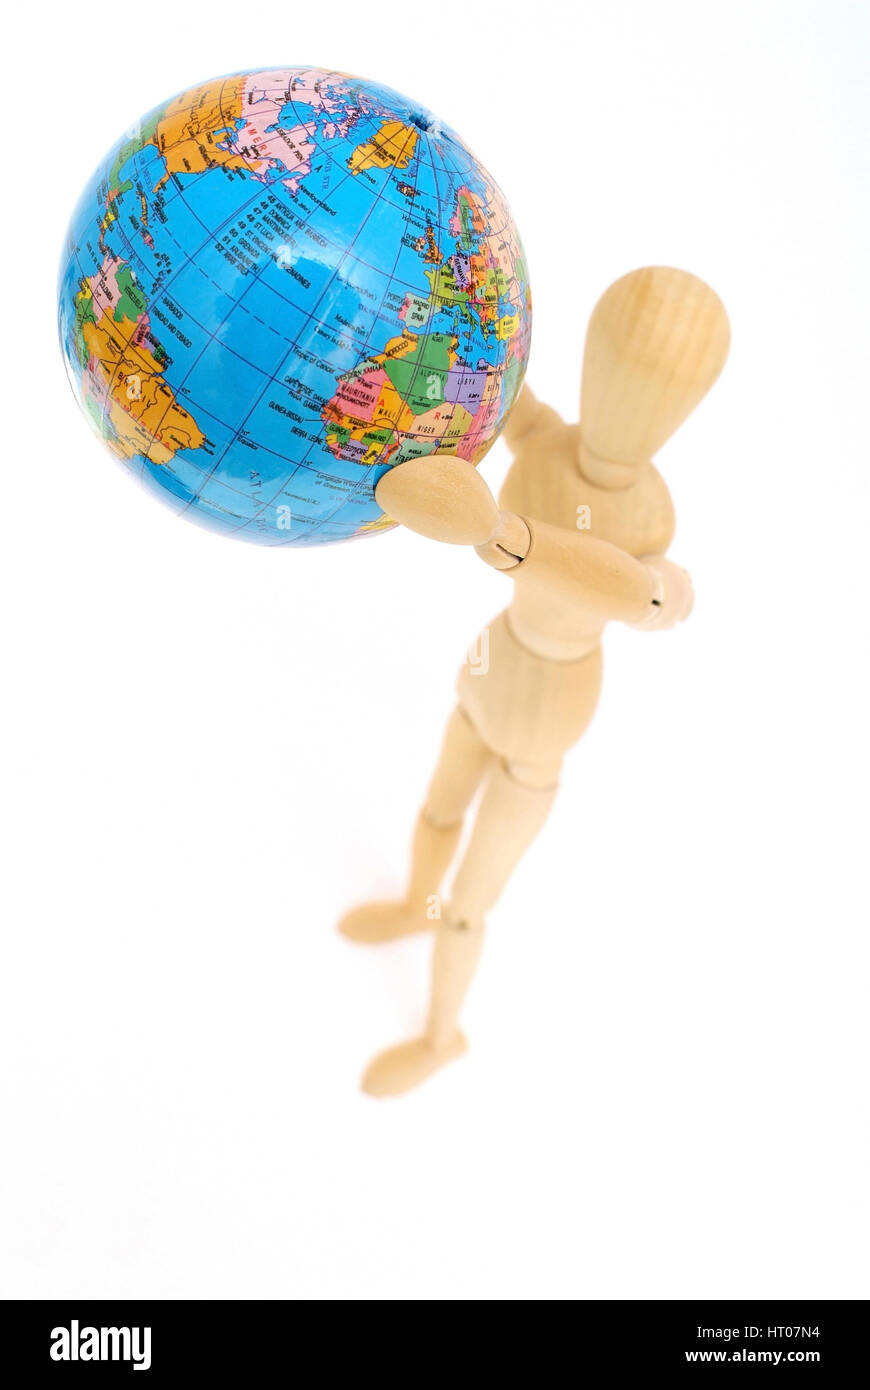 Holzfigur haelt Globus in der mano - bambola articolata con globo in mani Foto Stock